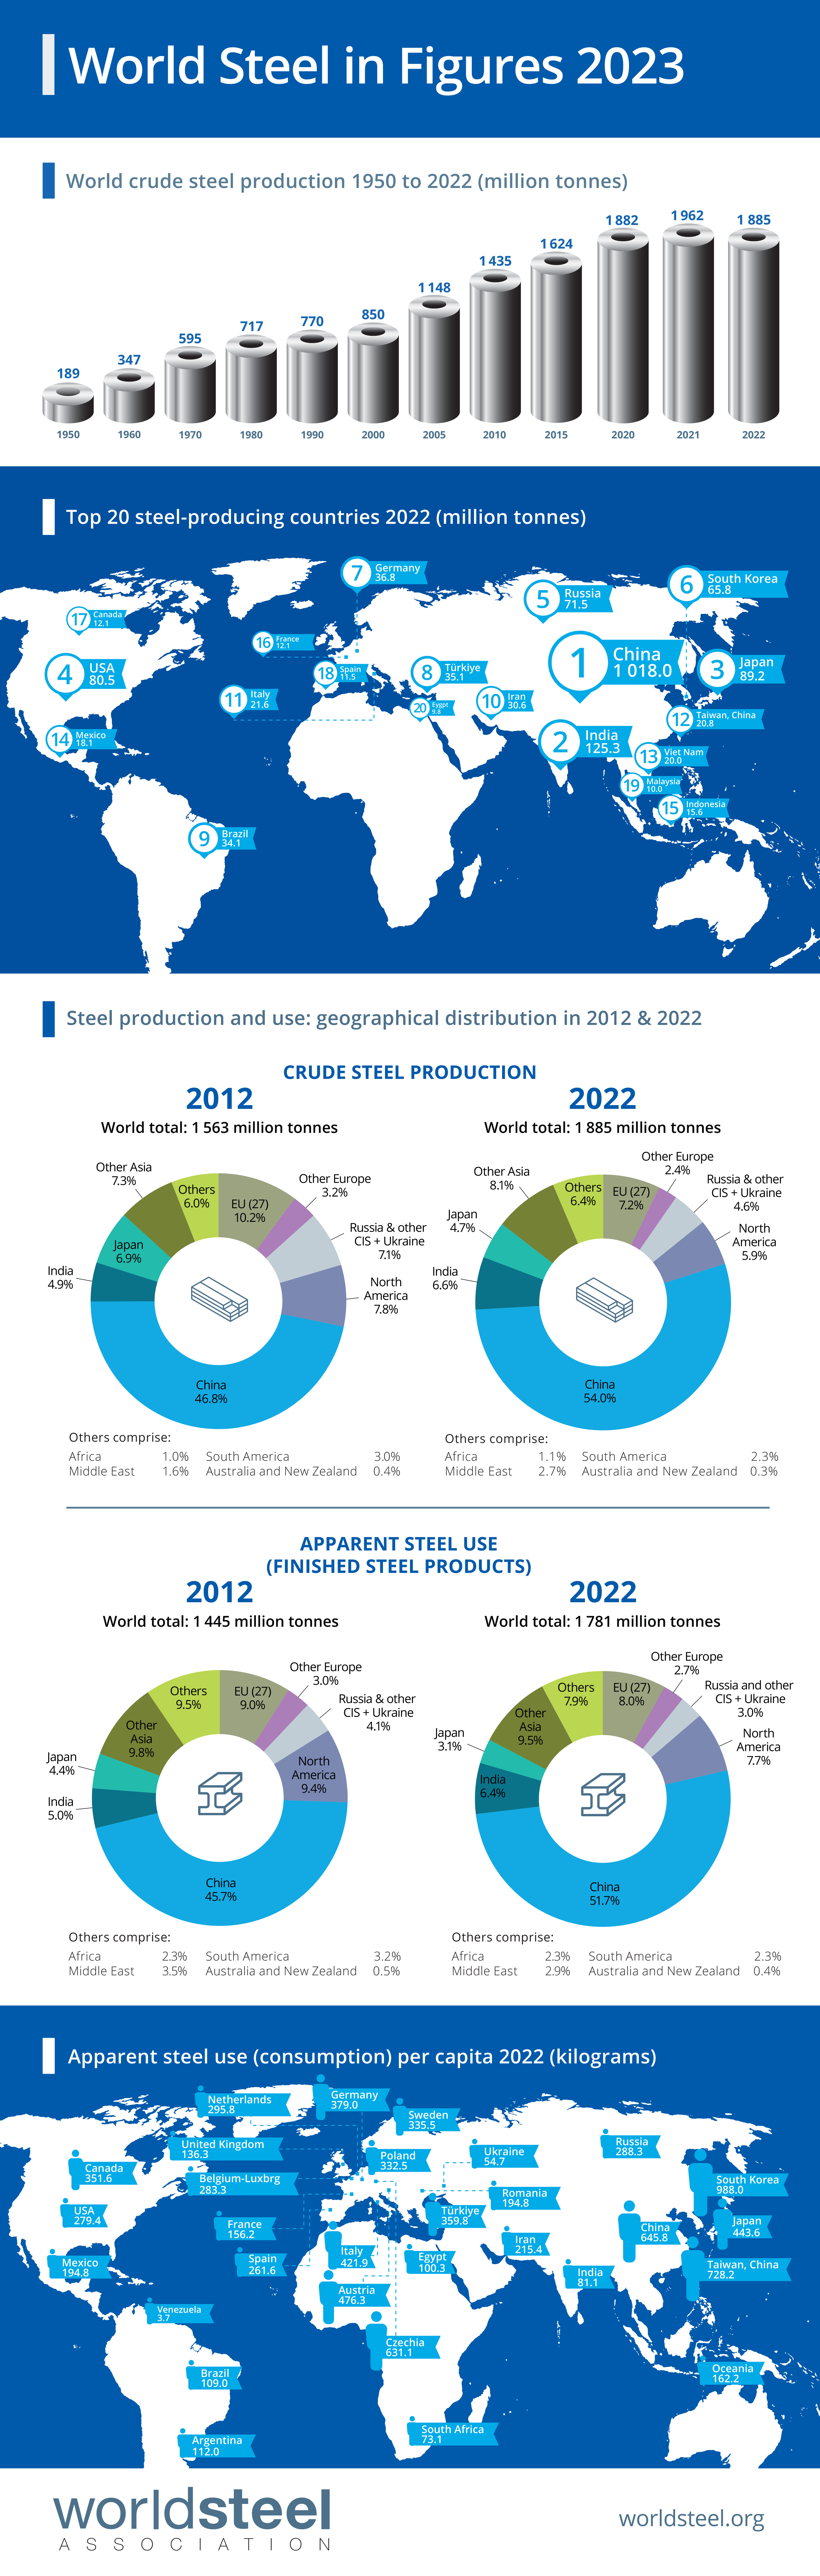 World Steel in Figures 2023 infographic